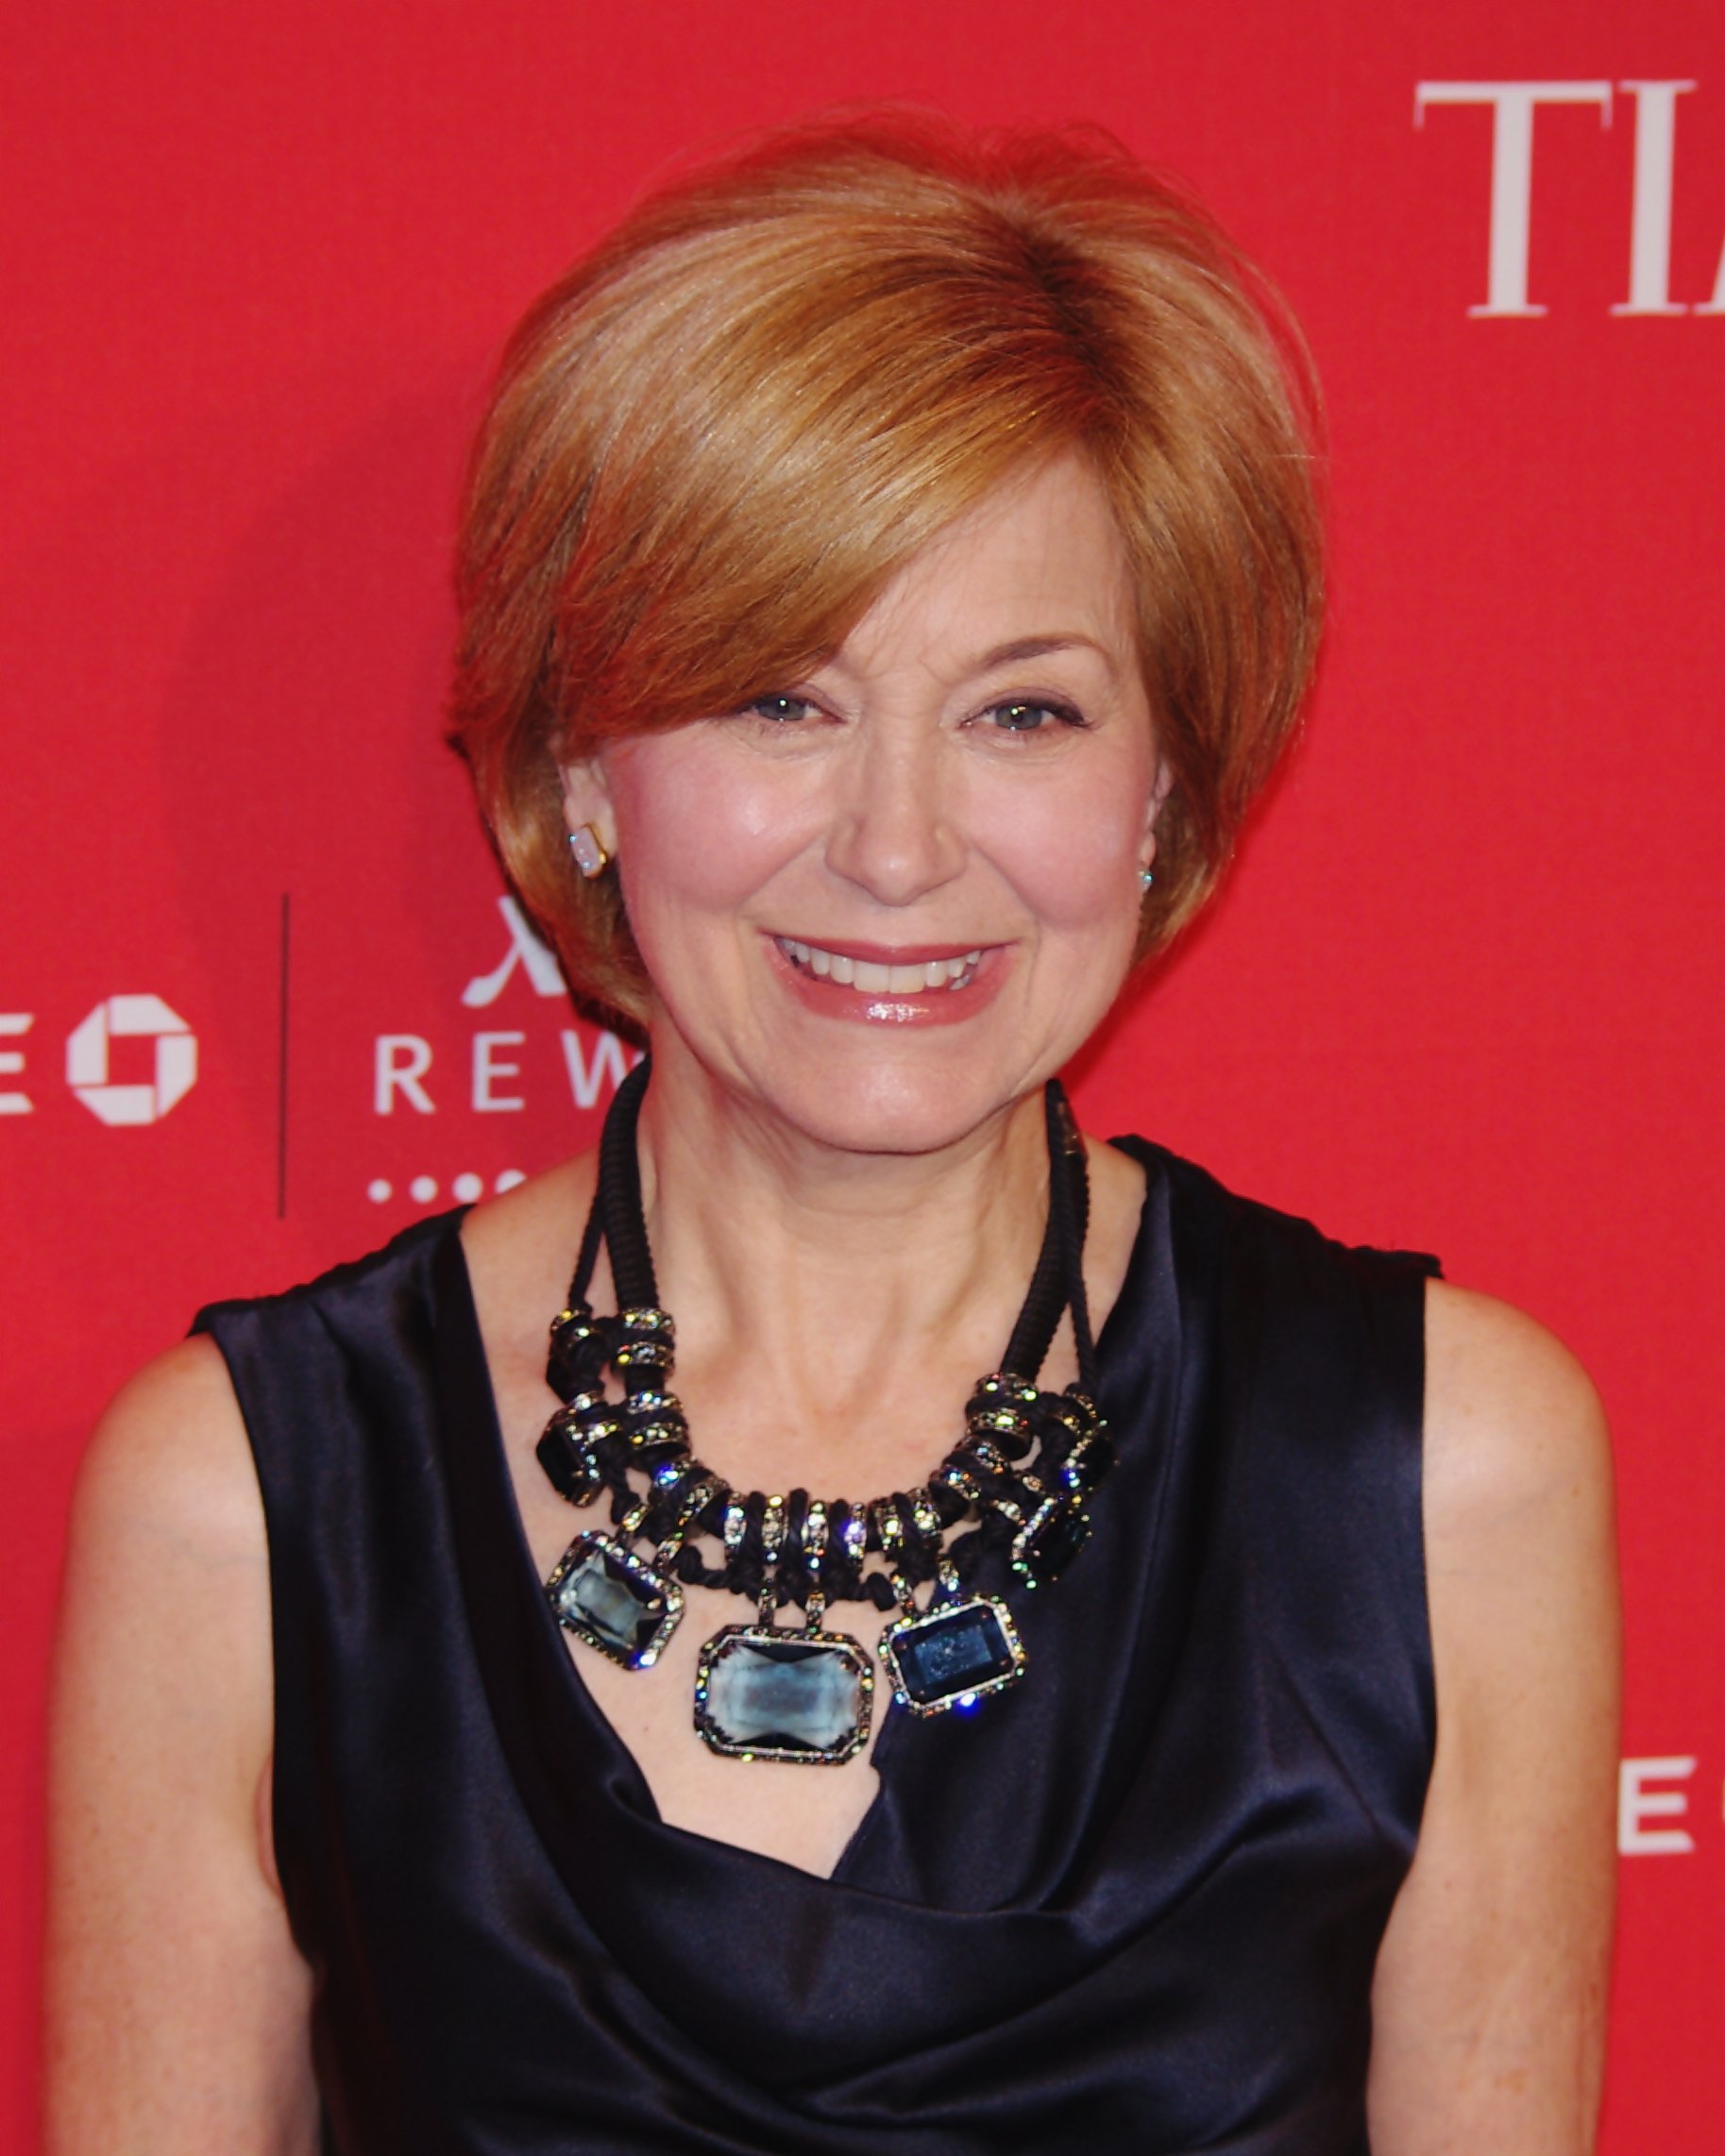 Jane Pauley at the 2012 Time 100 gala | Source: Wikimedia Commons